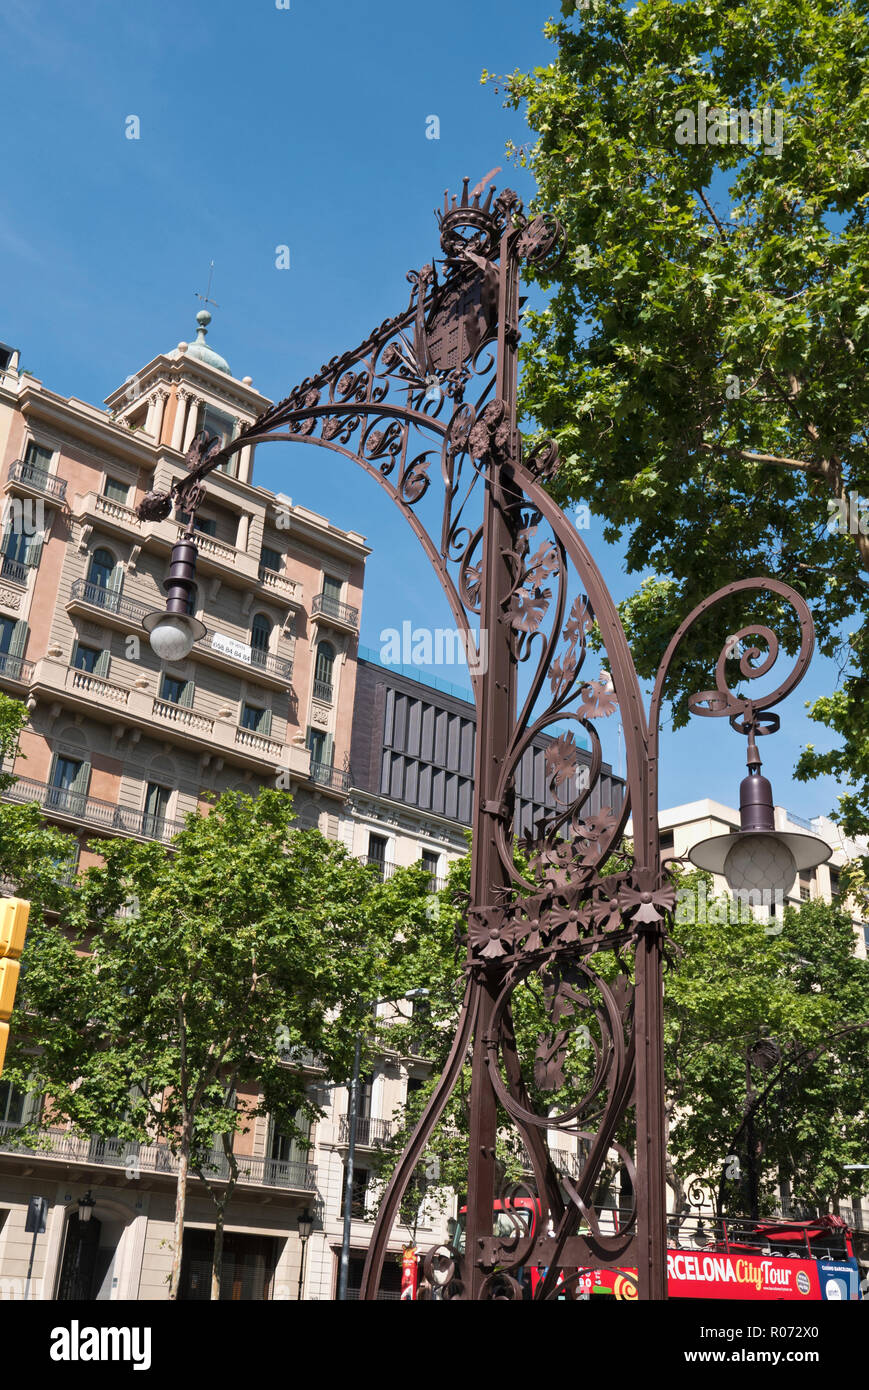 An ornate street lamp post in Barcelona, Spain Stock Photo